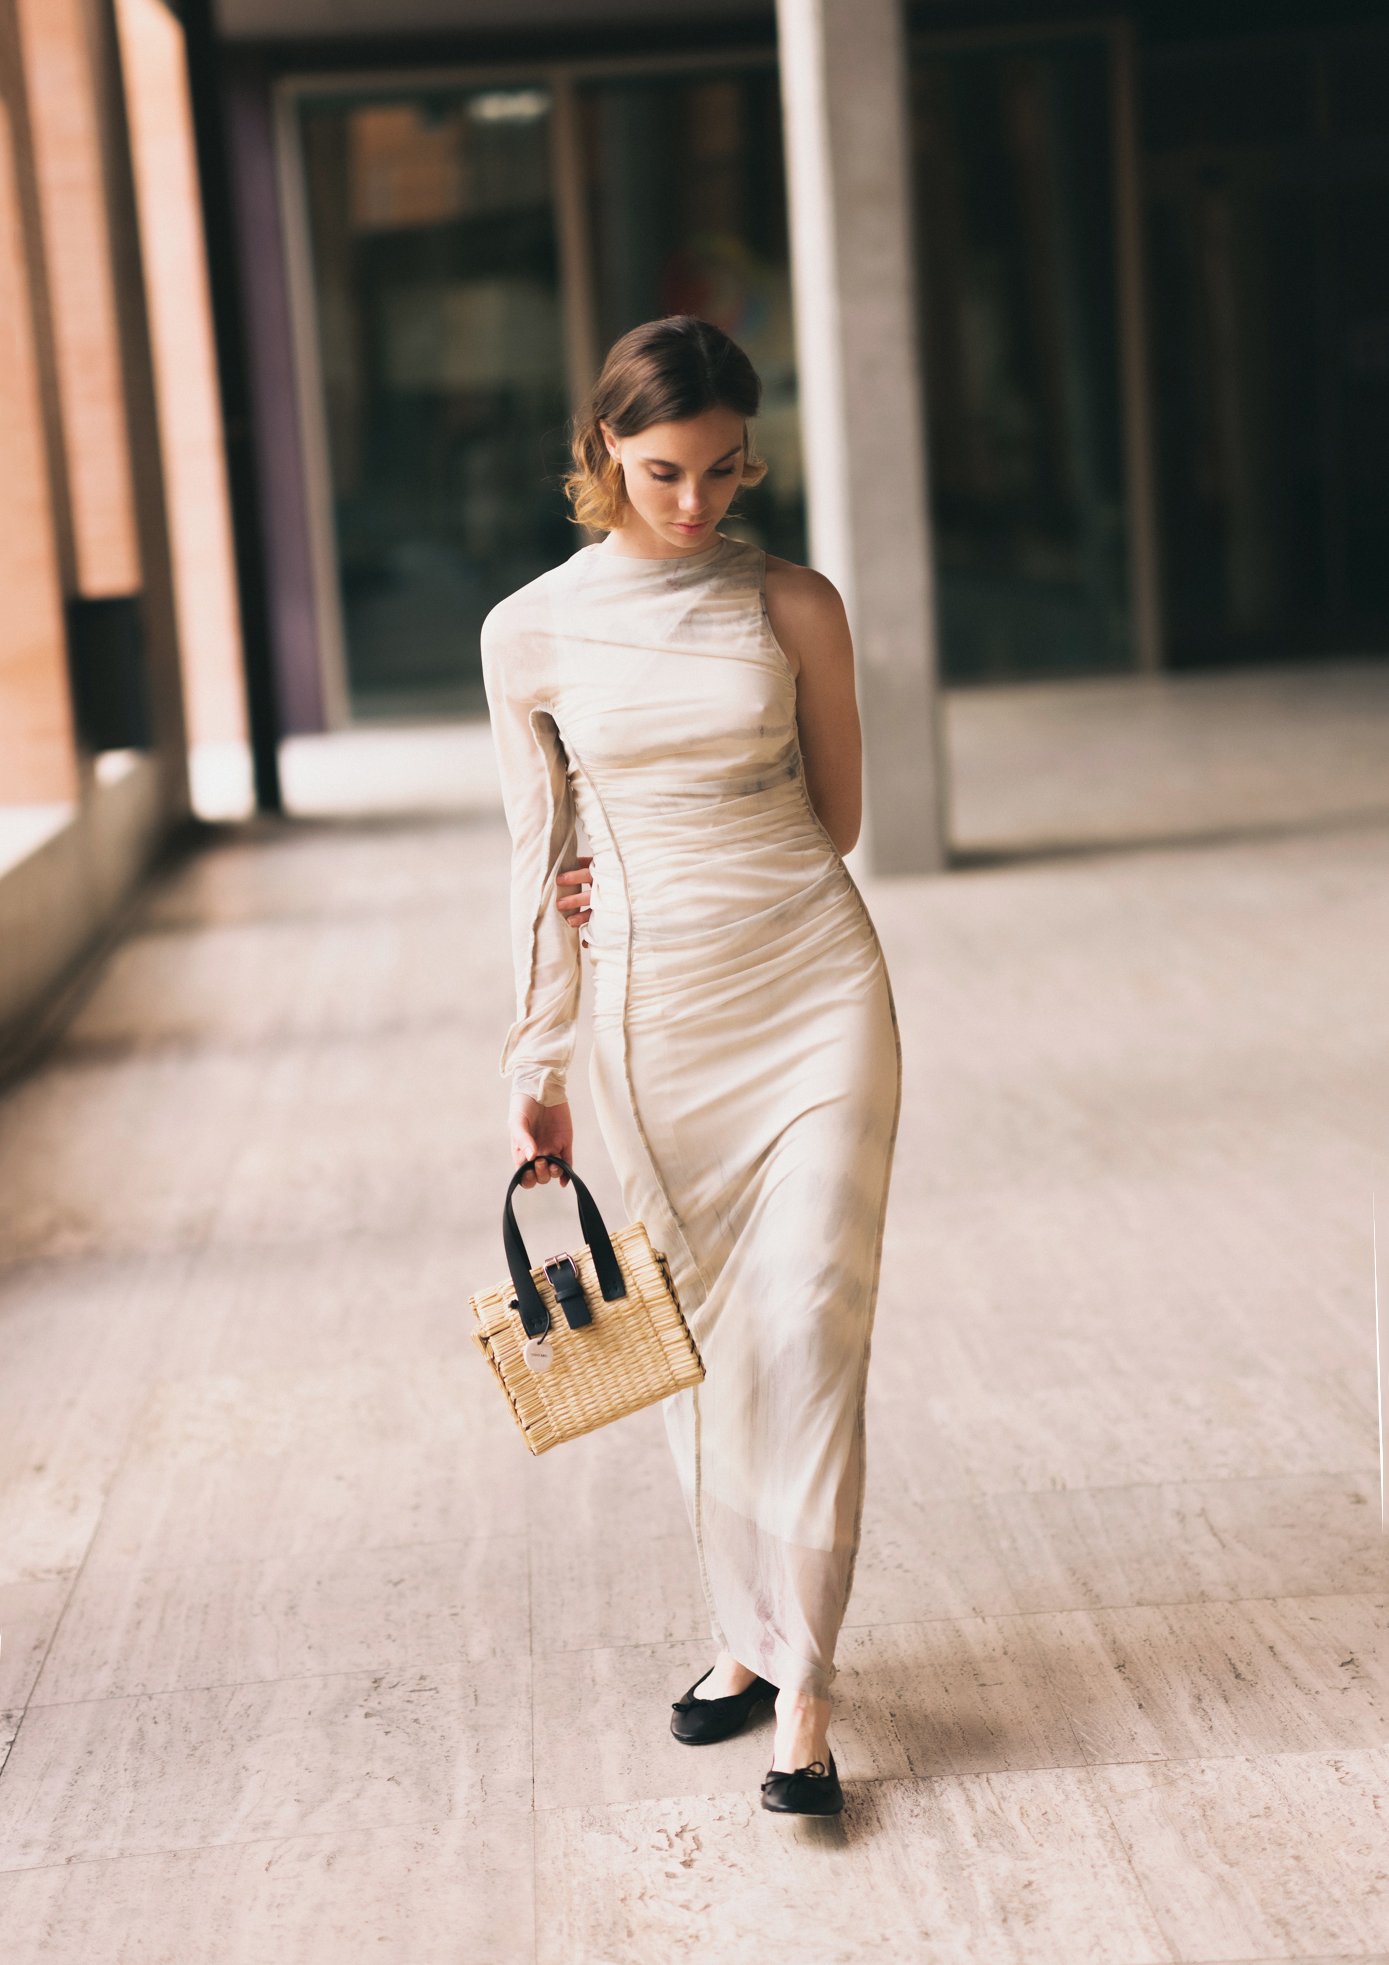 Luxury Handbags & Purses | Luella Grey London